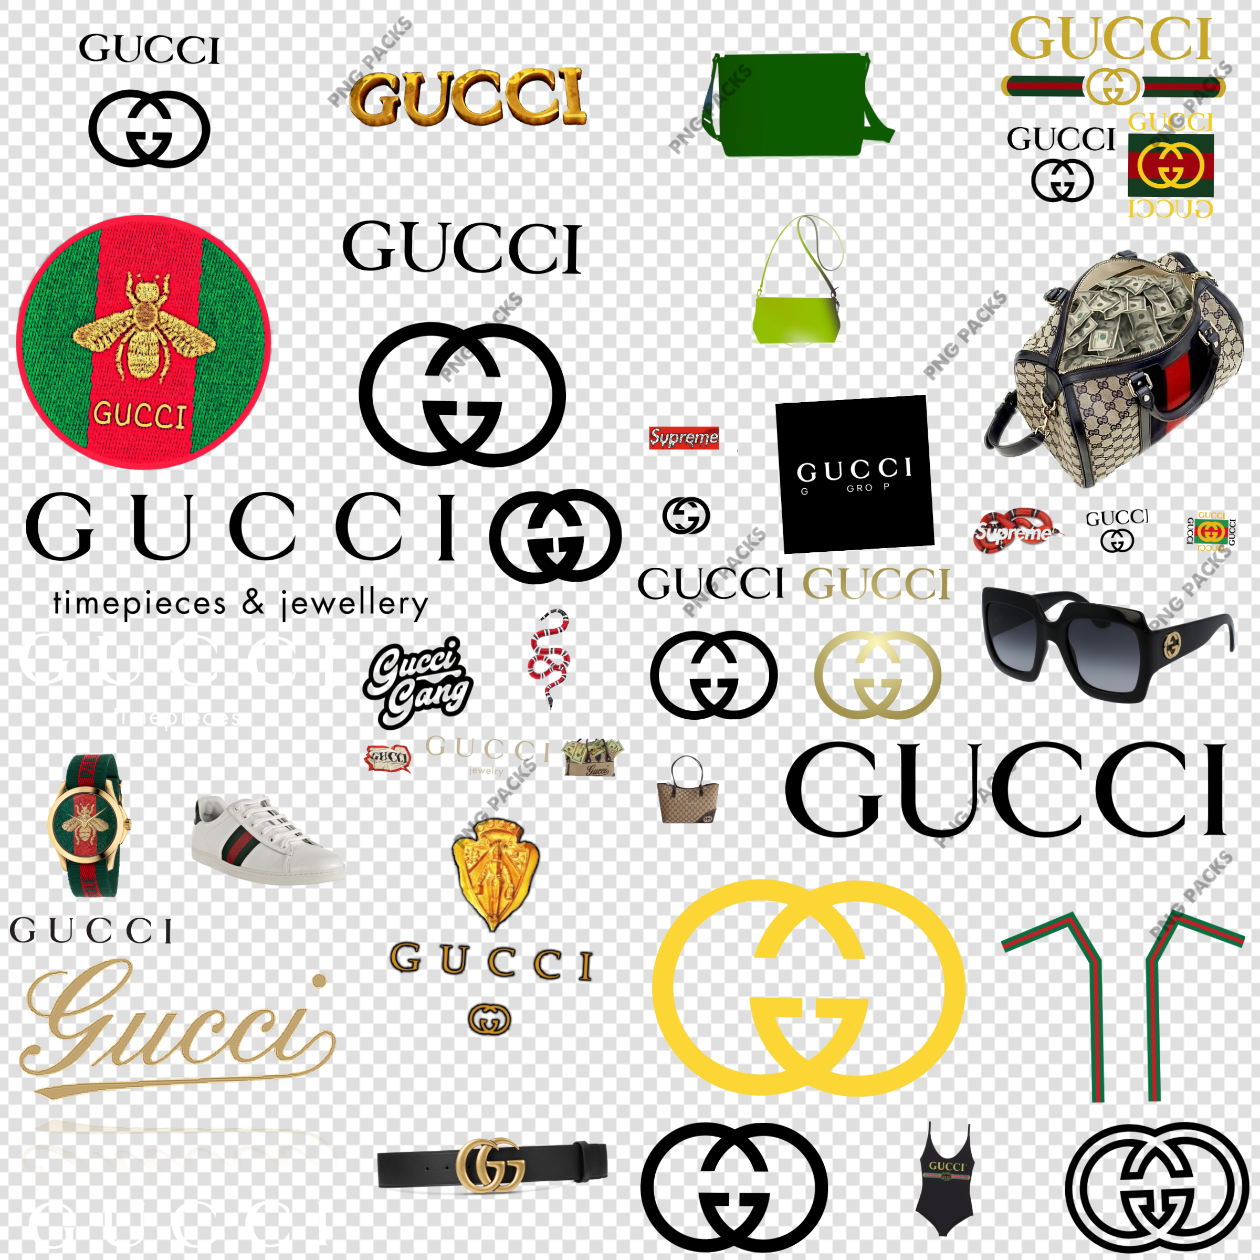 Gucci PNG Transparent Images Download - PNG Packs